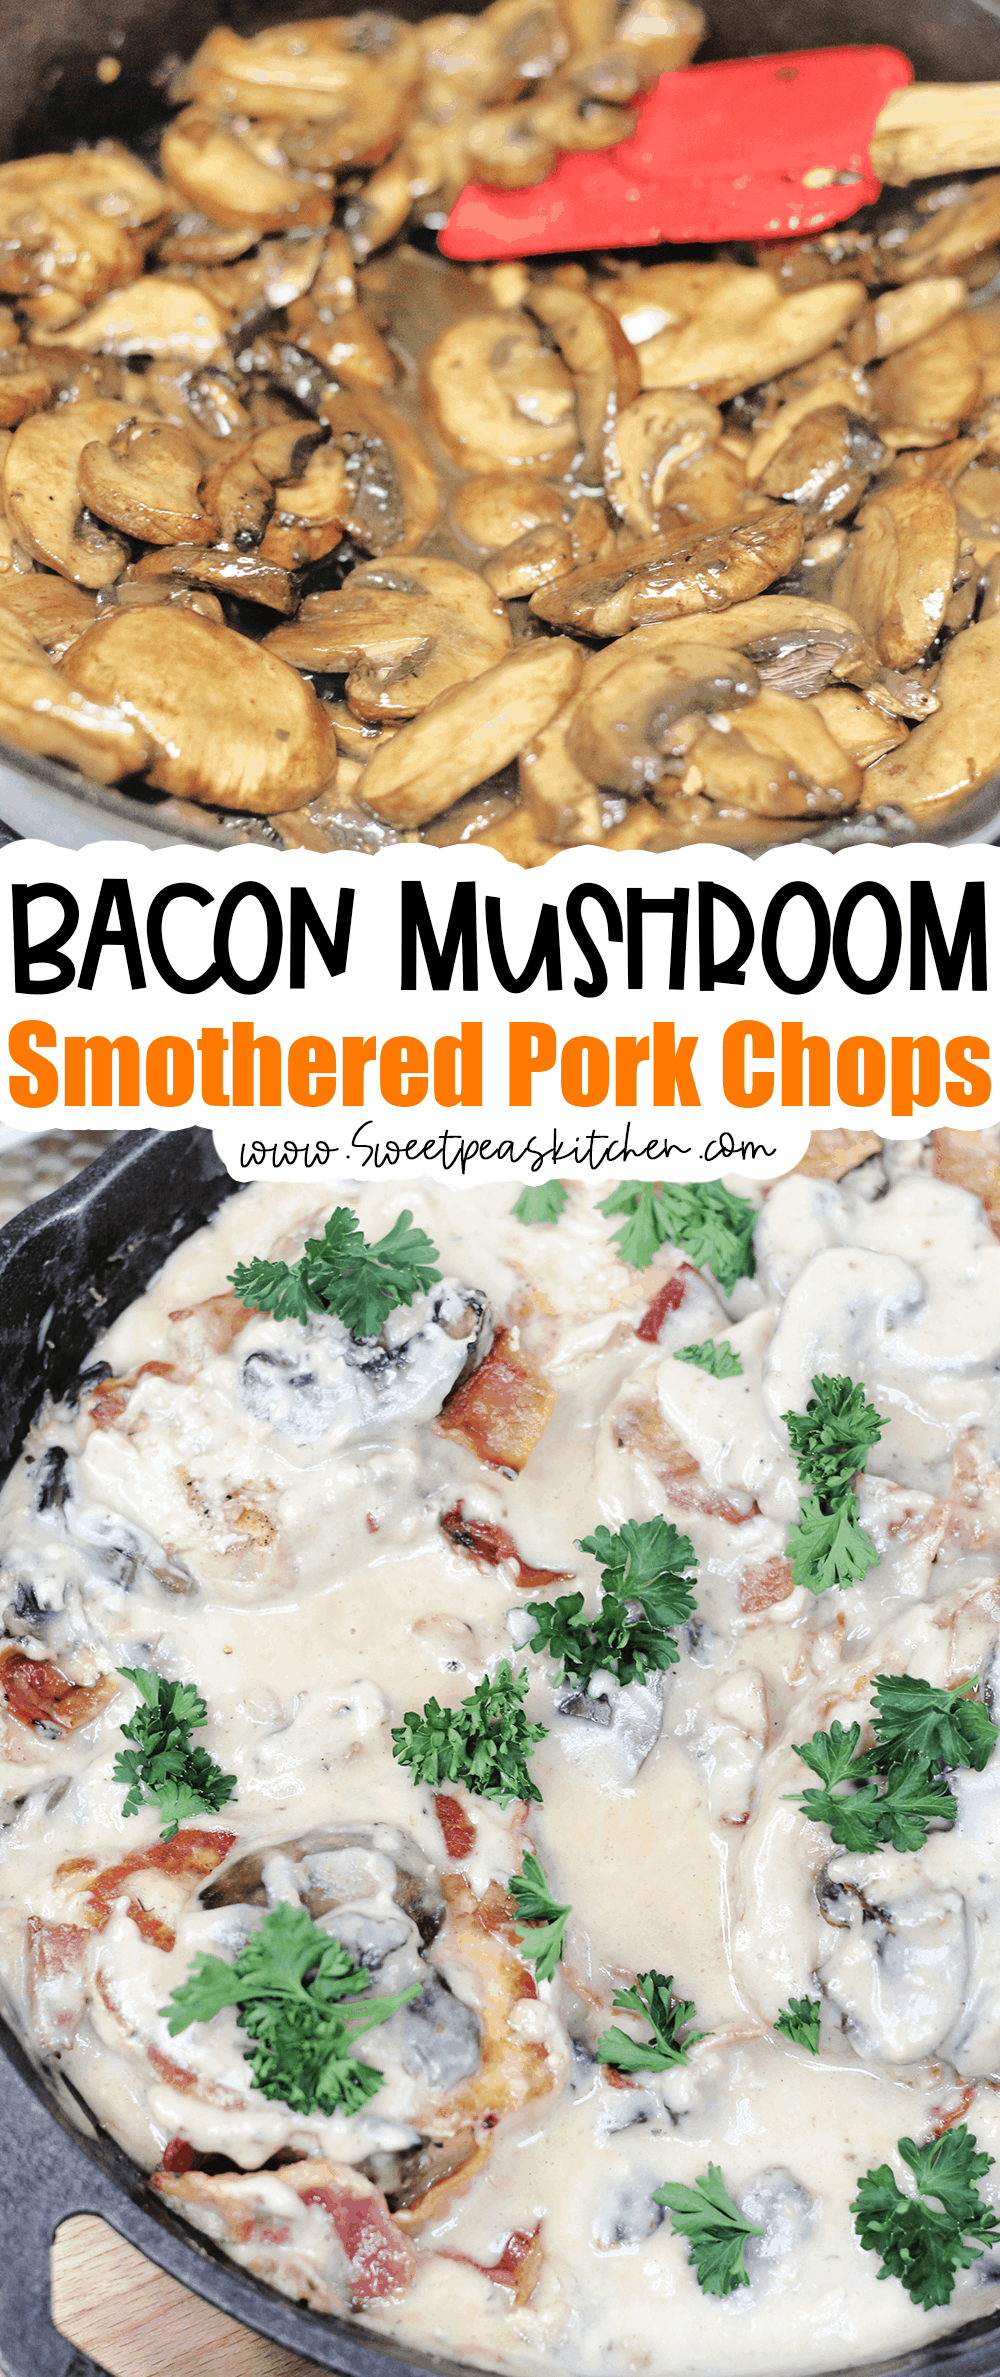 Bacon Mushroom Smothered Pork Chops